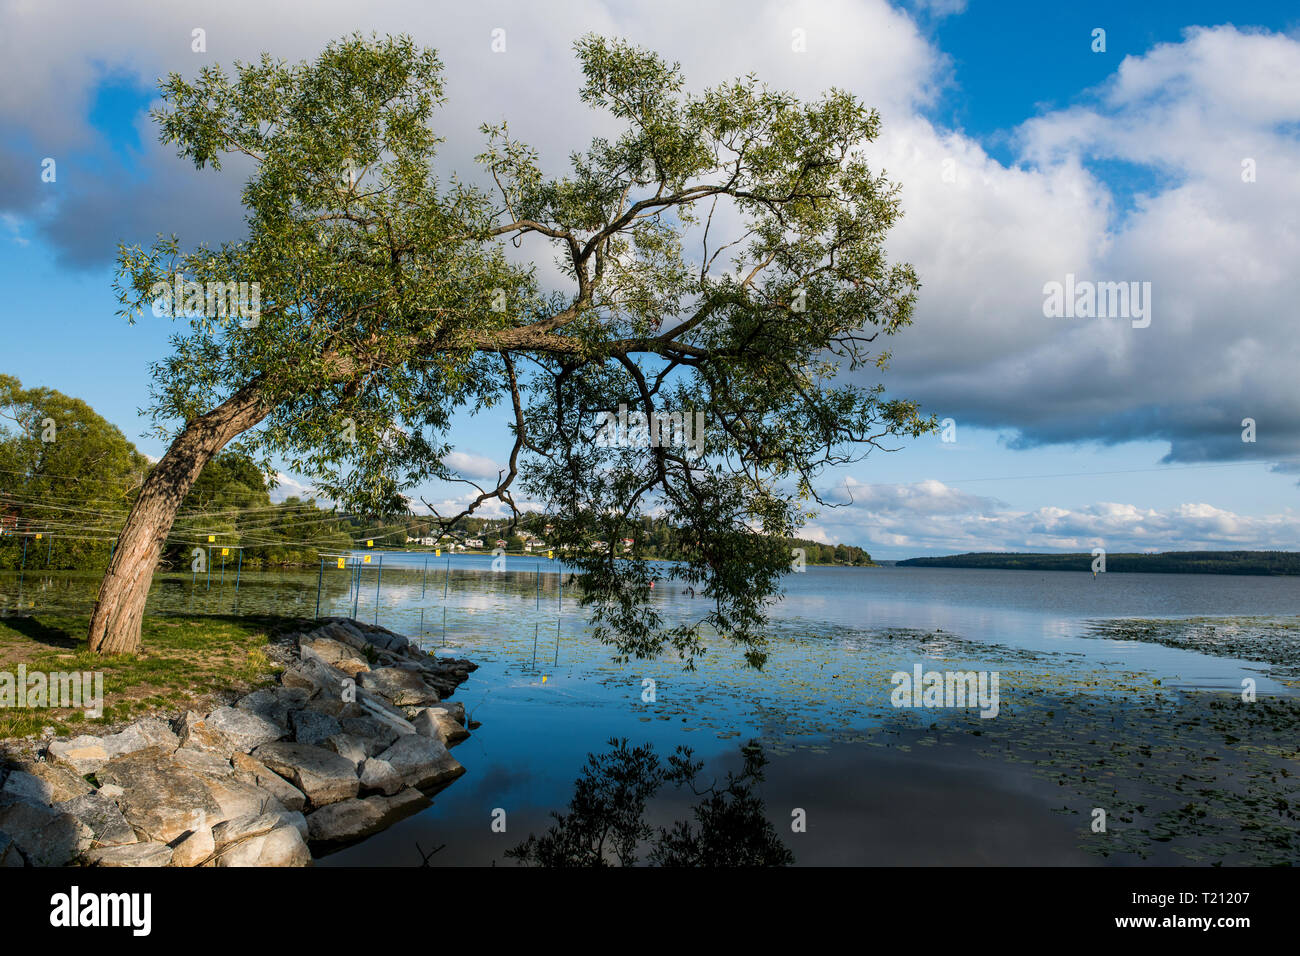 Sweden, Sigtuna, Park on Malaren lake Stock Photo